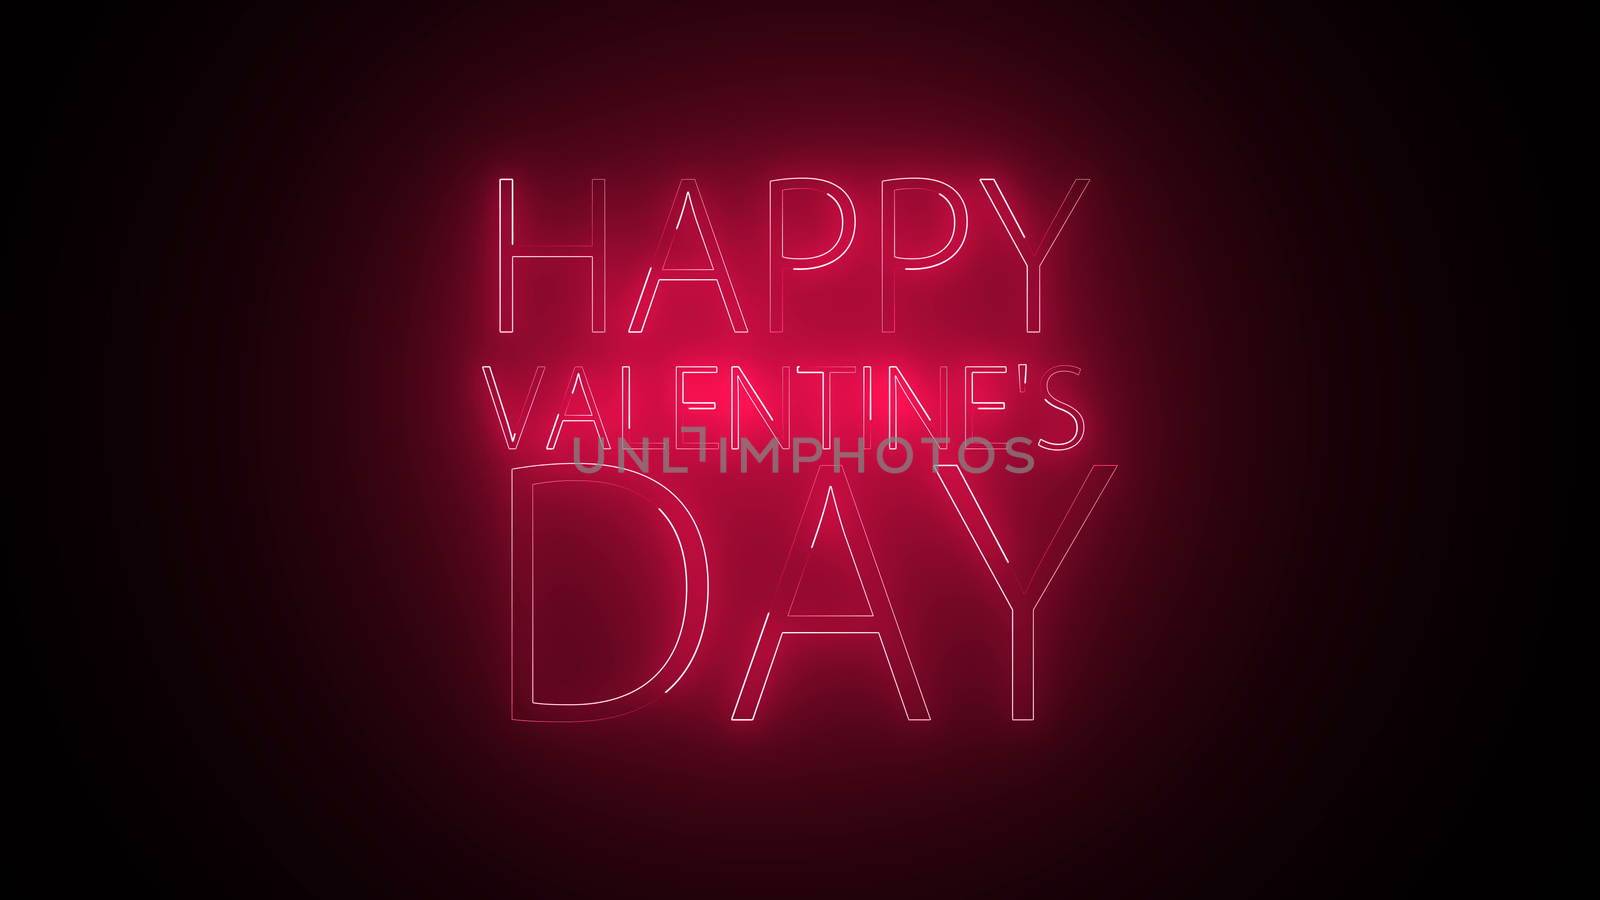 Happy Valentine's Day Text in neon. 3d rendering